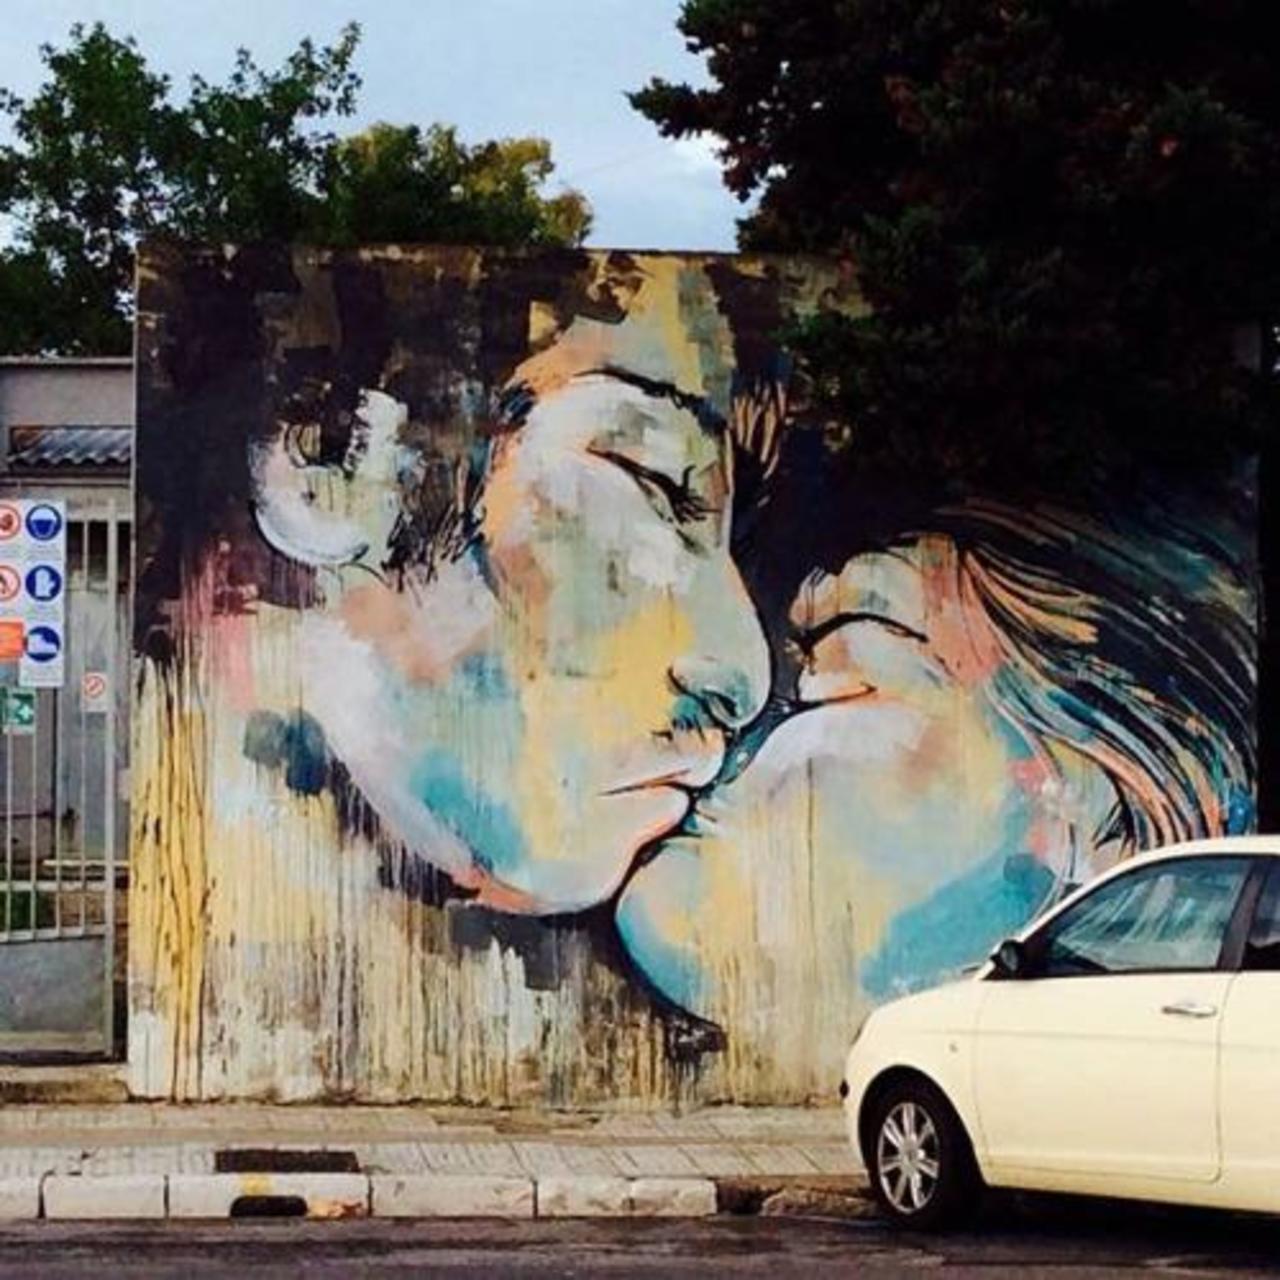 Alice Pasquini #memorieurbane #gaeta #streetart #graffiti... http://ift.tt/1PIeE7h #alicepasquini http://t.co/bqzpZjVQM0